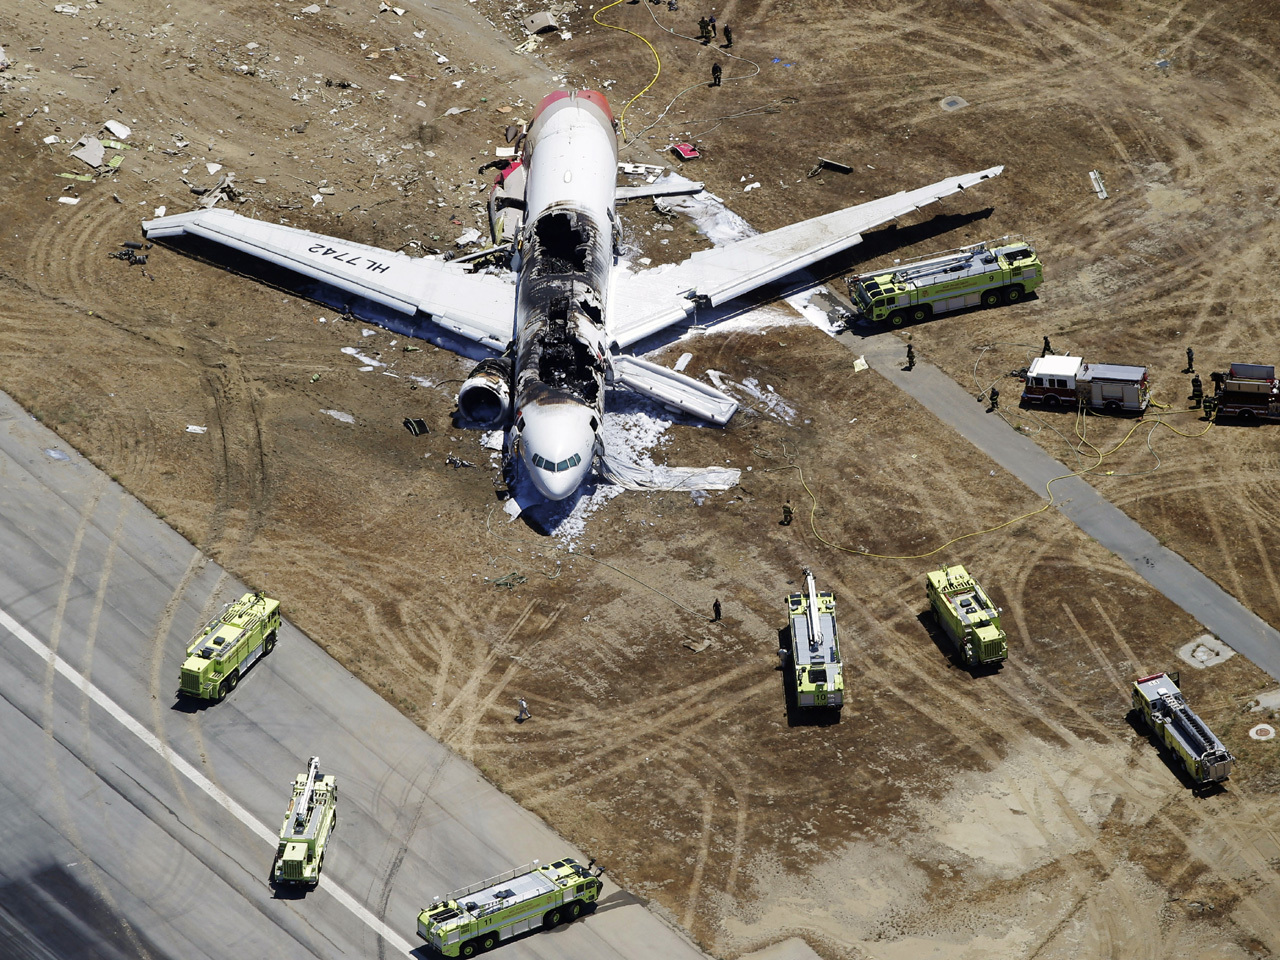 Plane crash at San Francisco airport, 2 dead CBS News